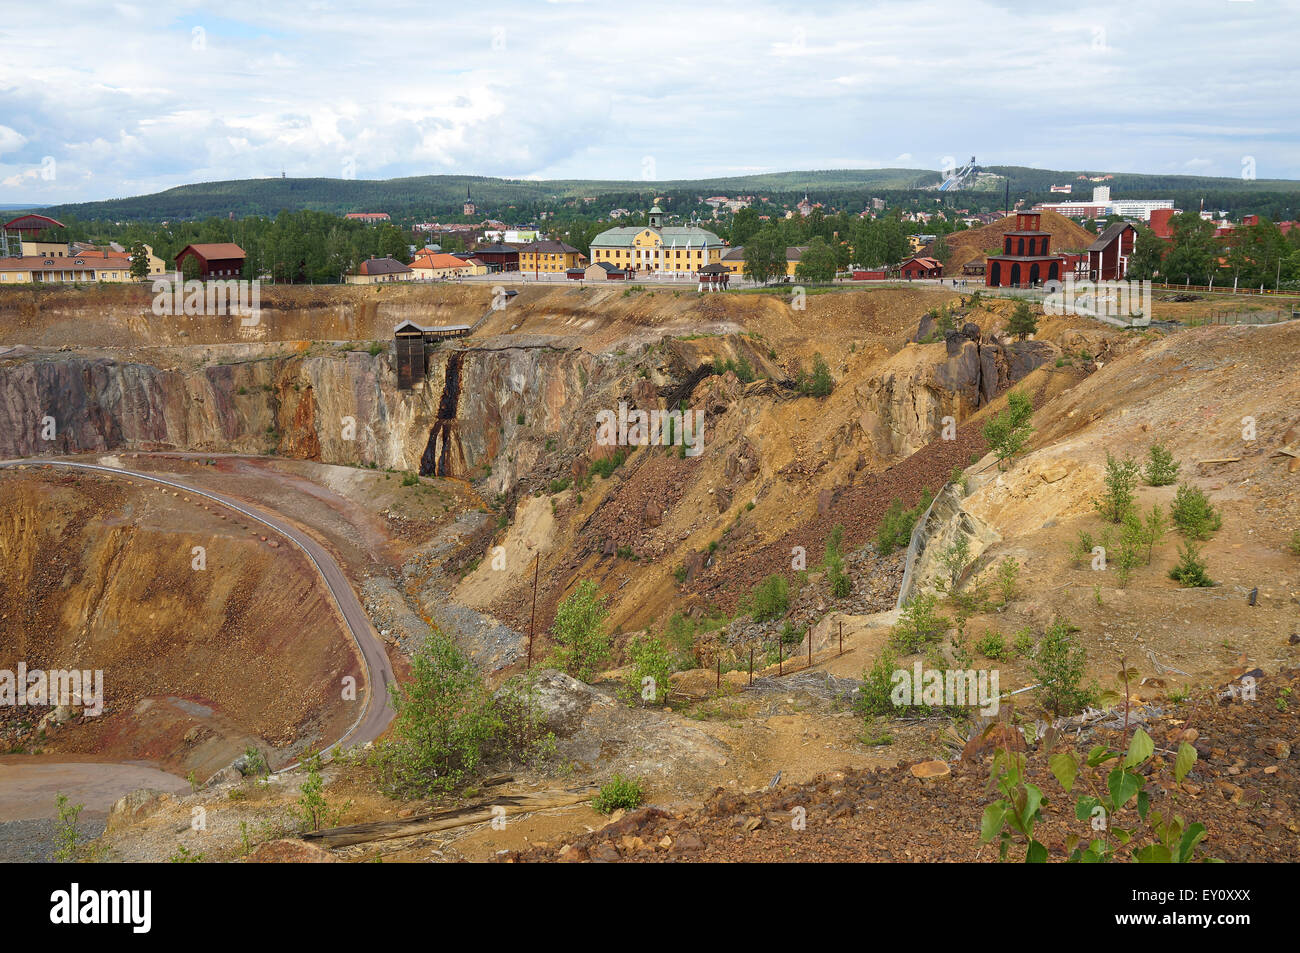 Falu Gruva, coppermine in Falun, Dalarnas län, Sweden Stock Photo